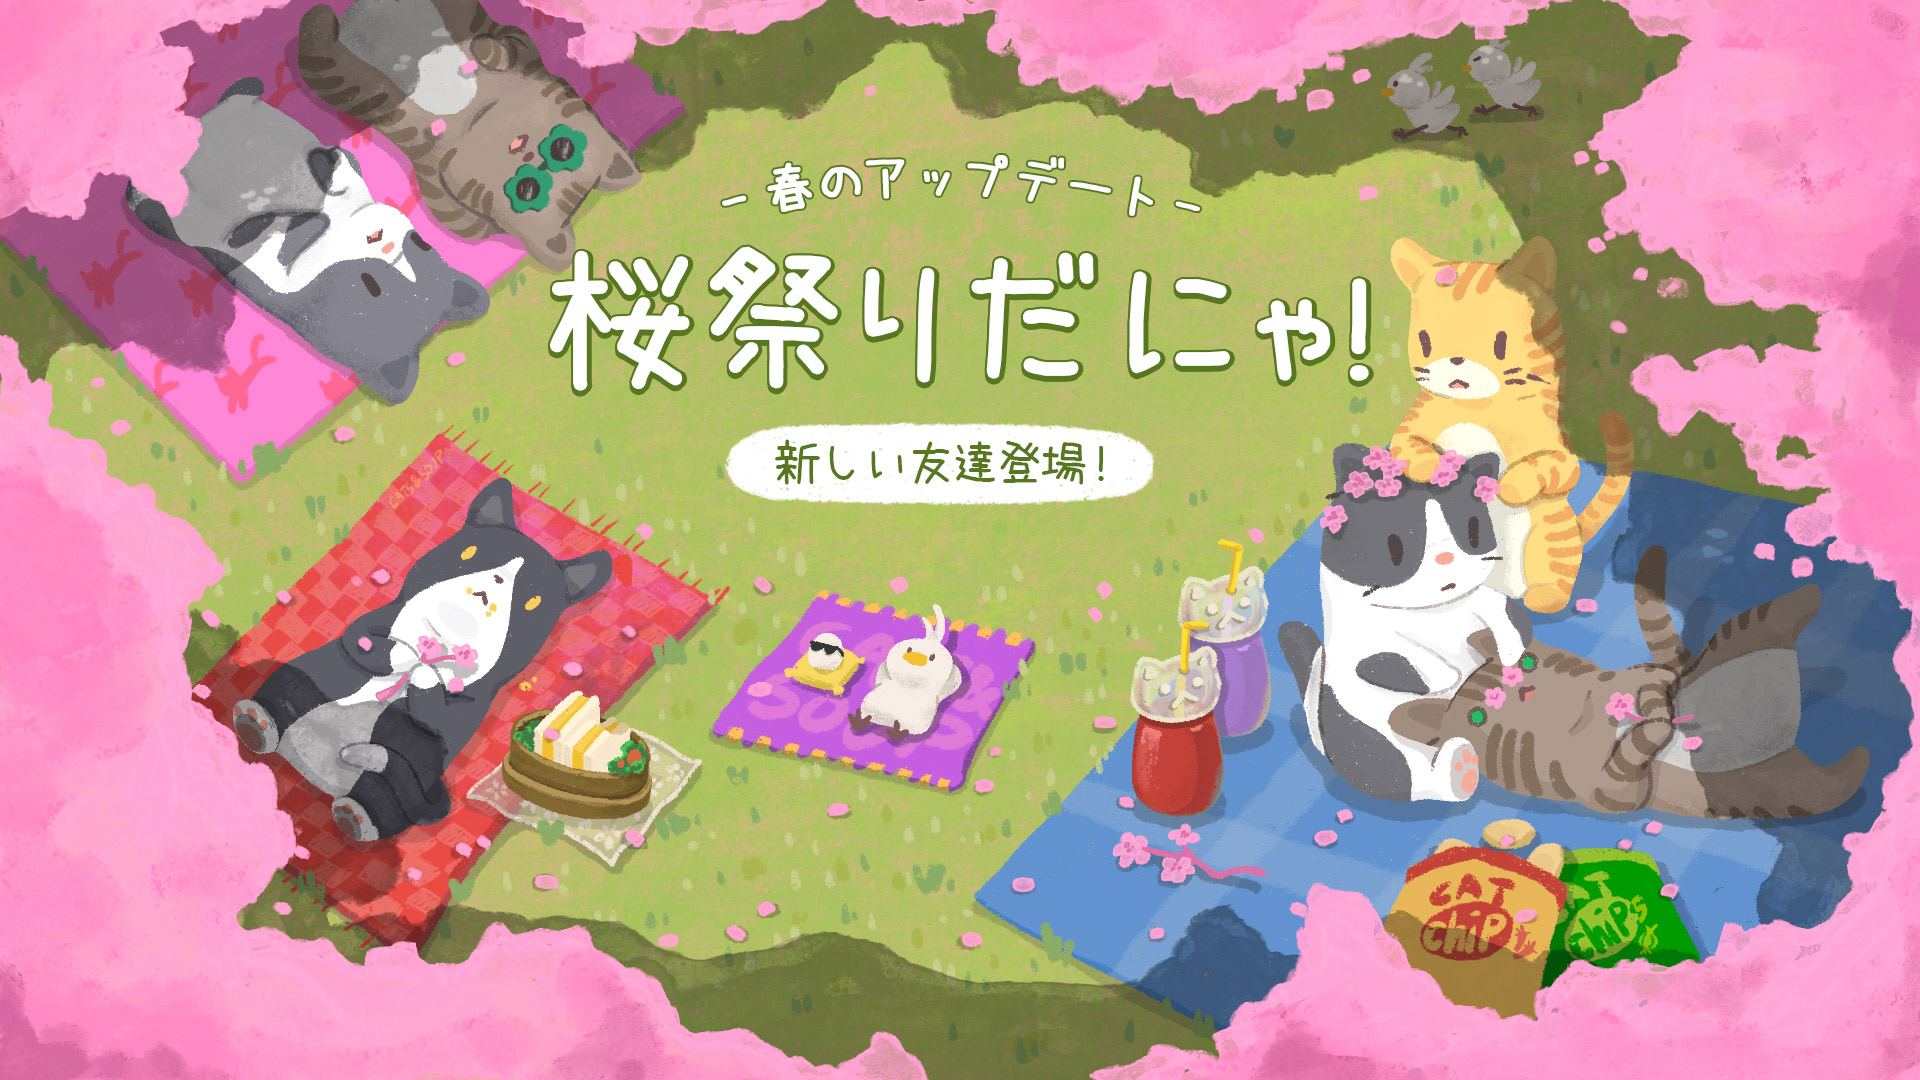 Neowiz プレスリリース Neowizモバイルゲーム 猫とスープ 春のアップデート 桜祭りだにゃ を実施 ゲームオンのプレスリリース